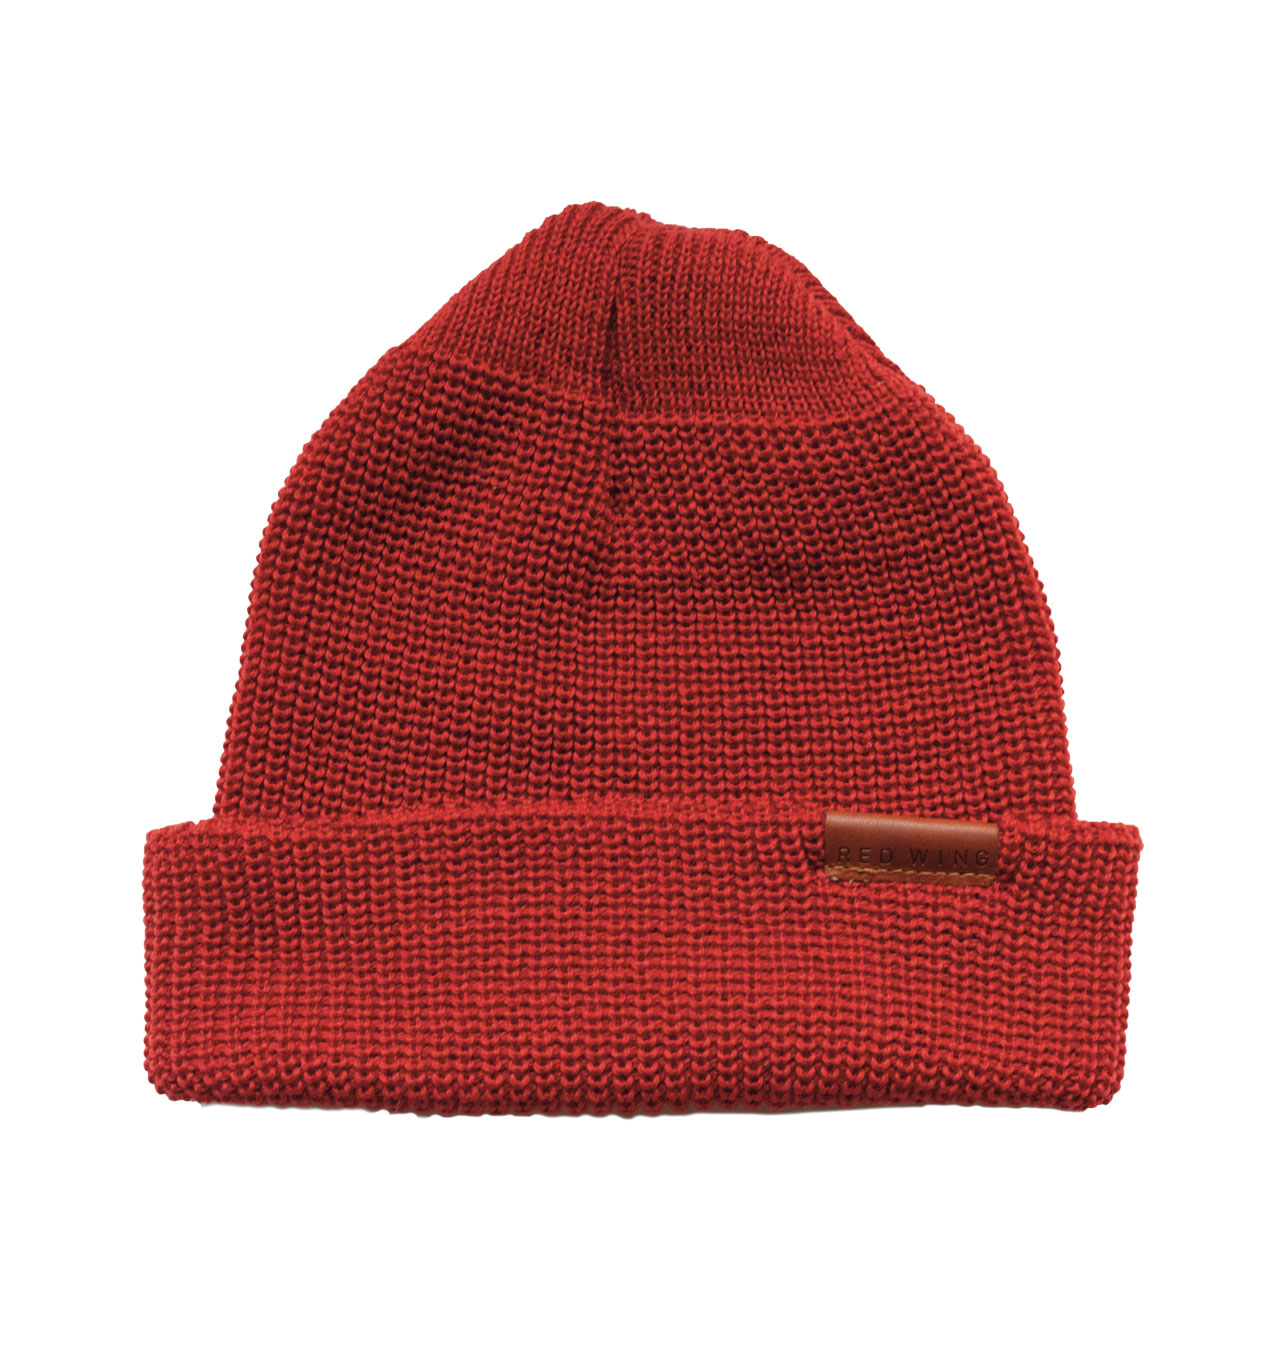 Red Wing - Merino Wool Knit Cap - Red